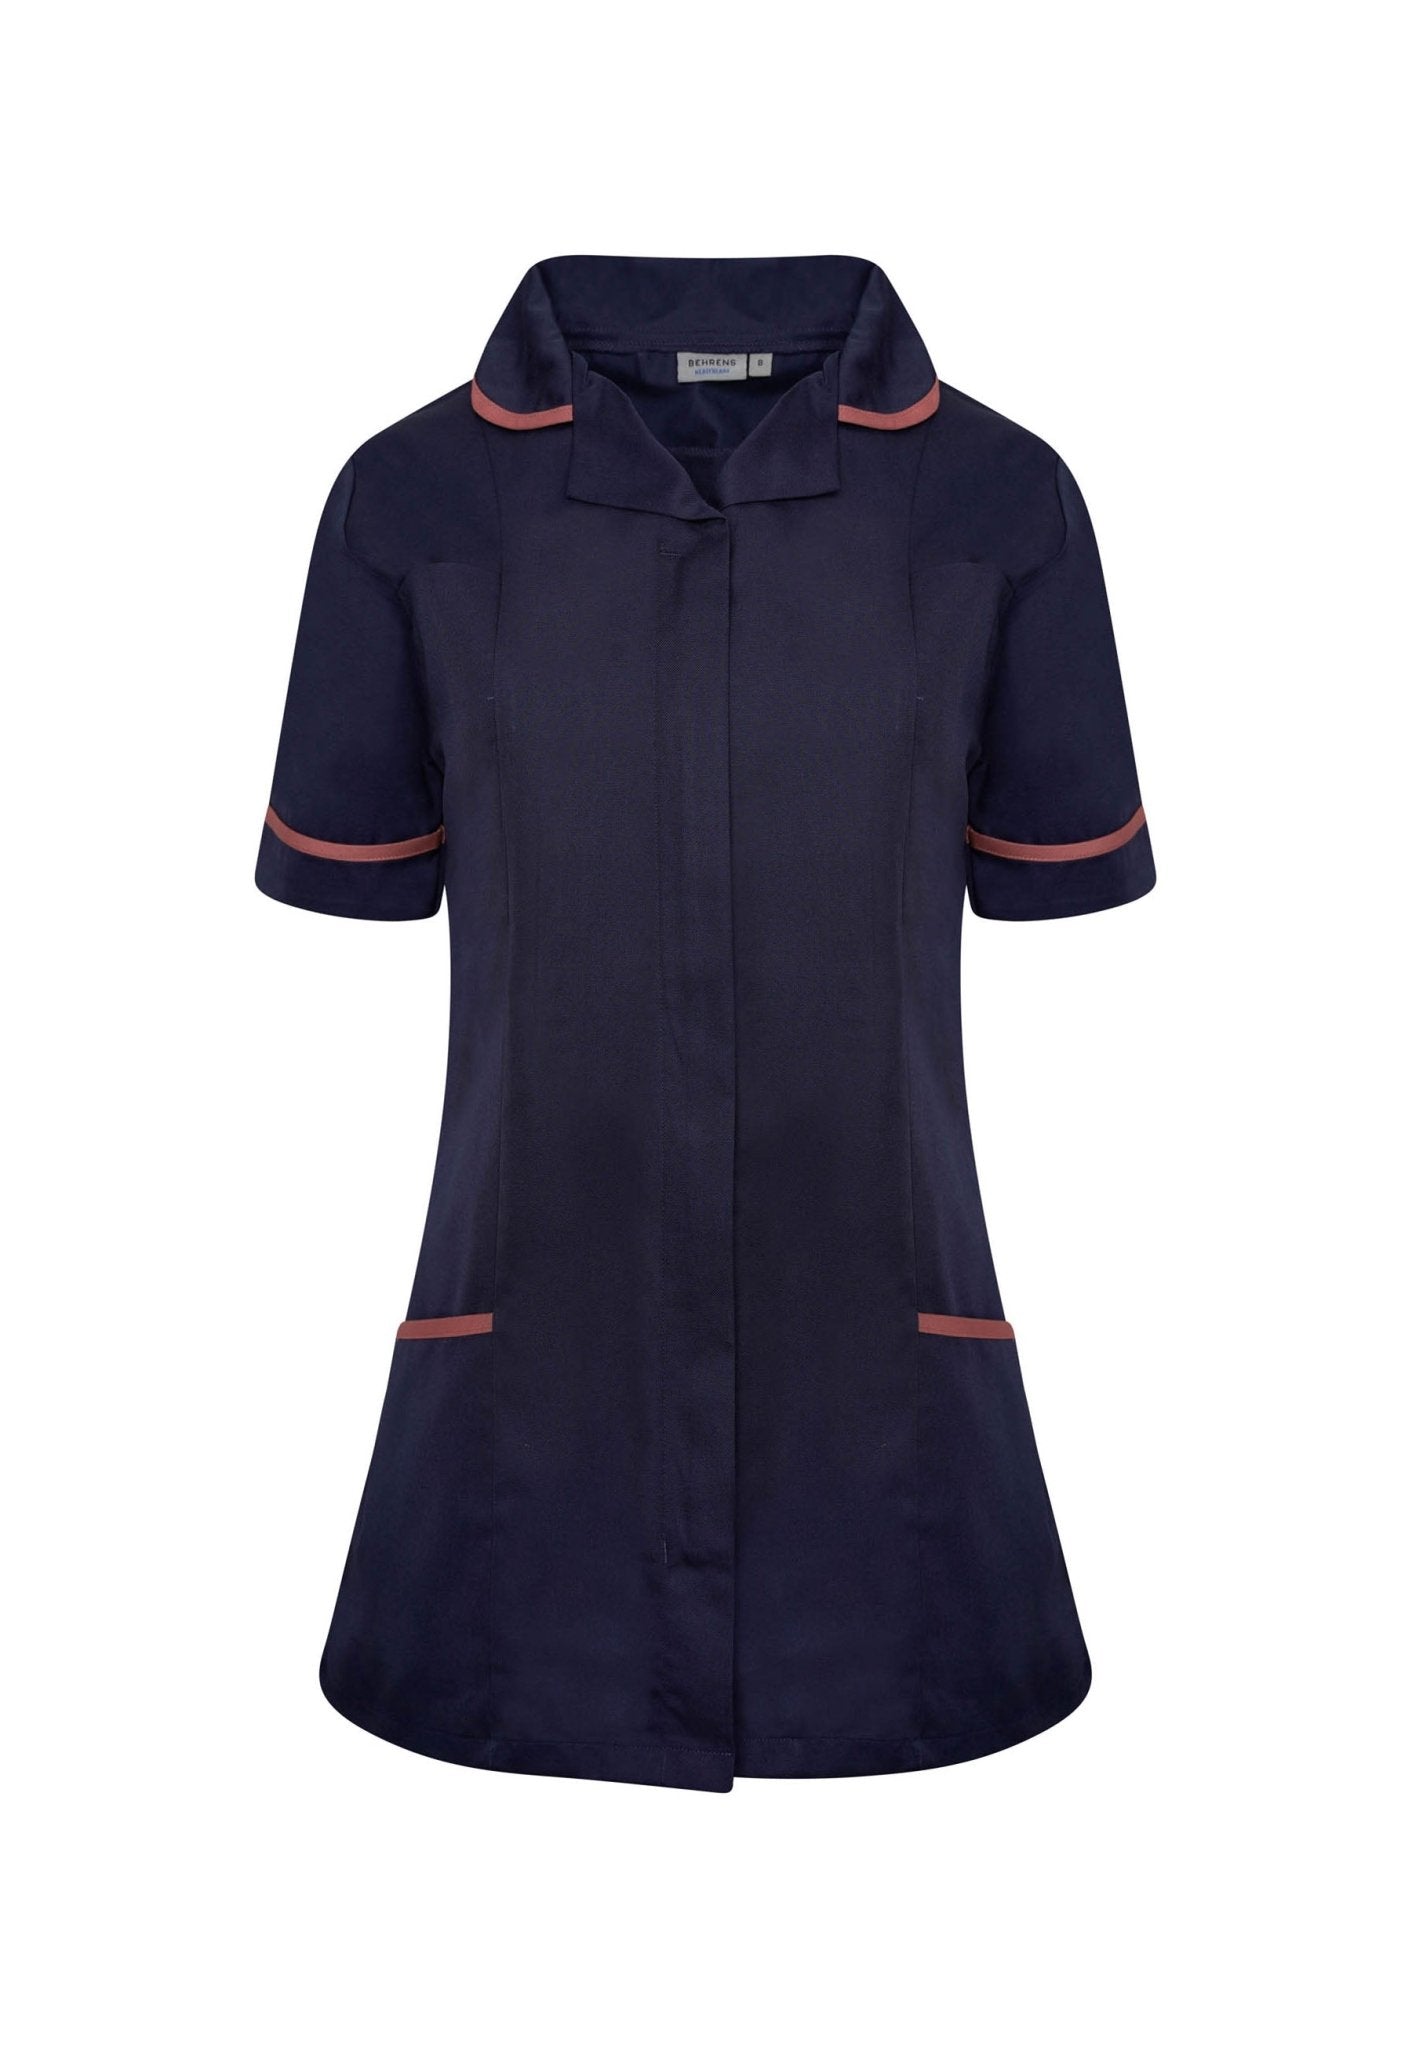 Navy Nurse Tunic - The Work Uniform Company